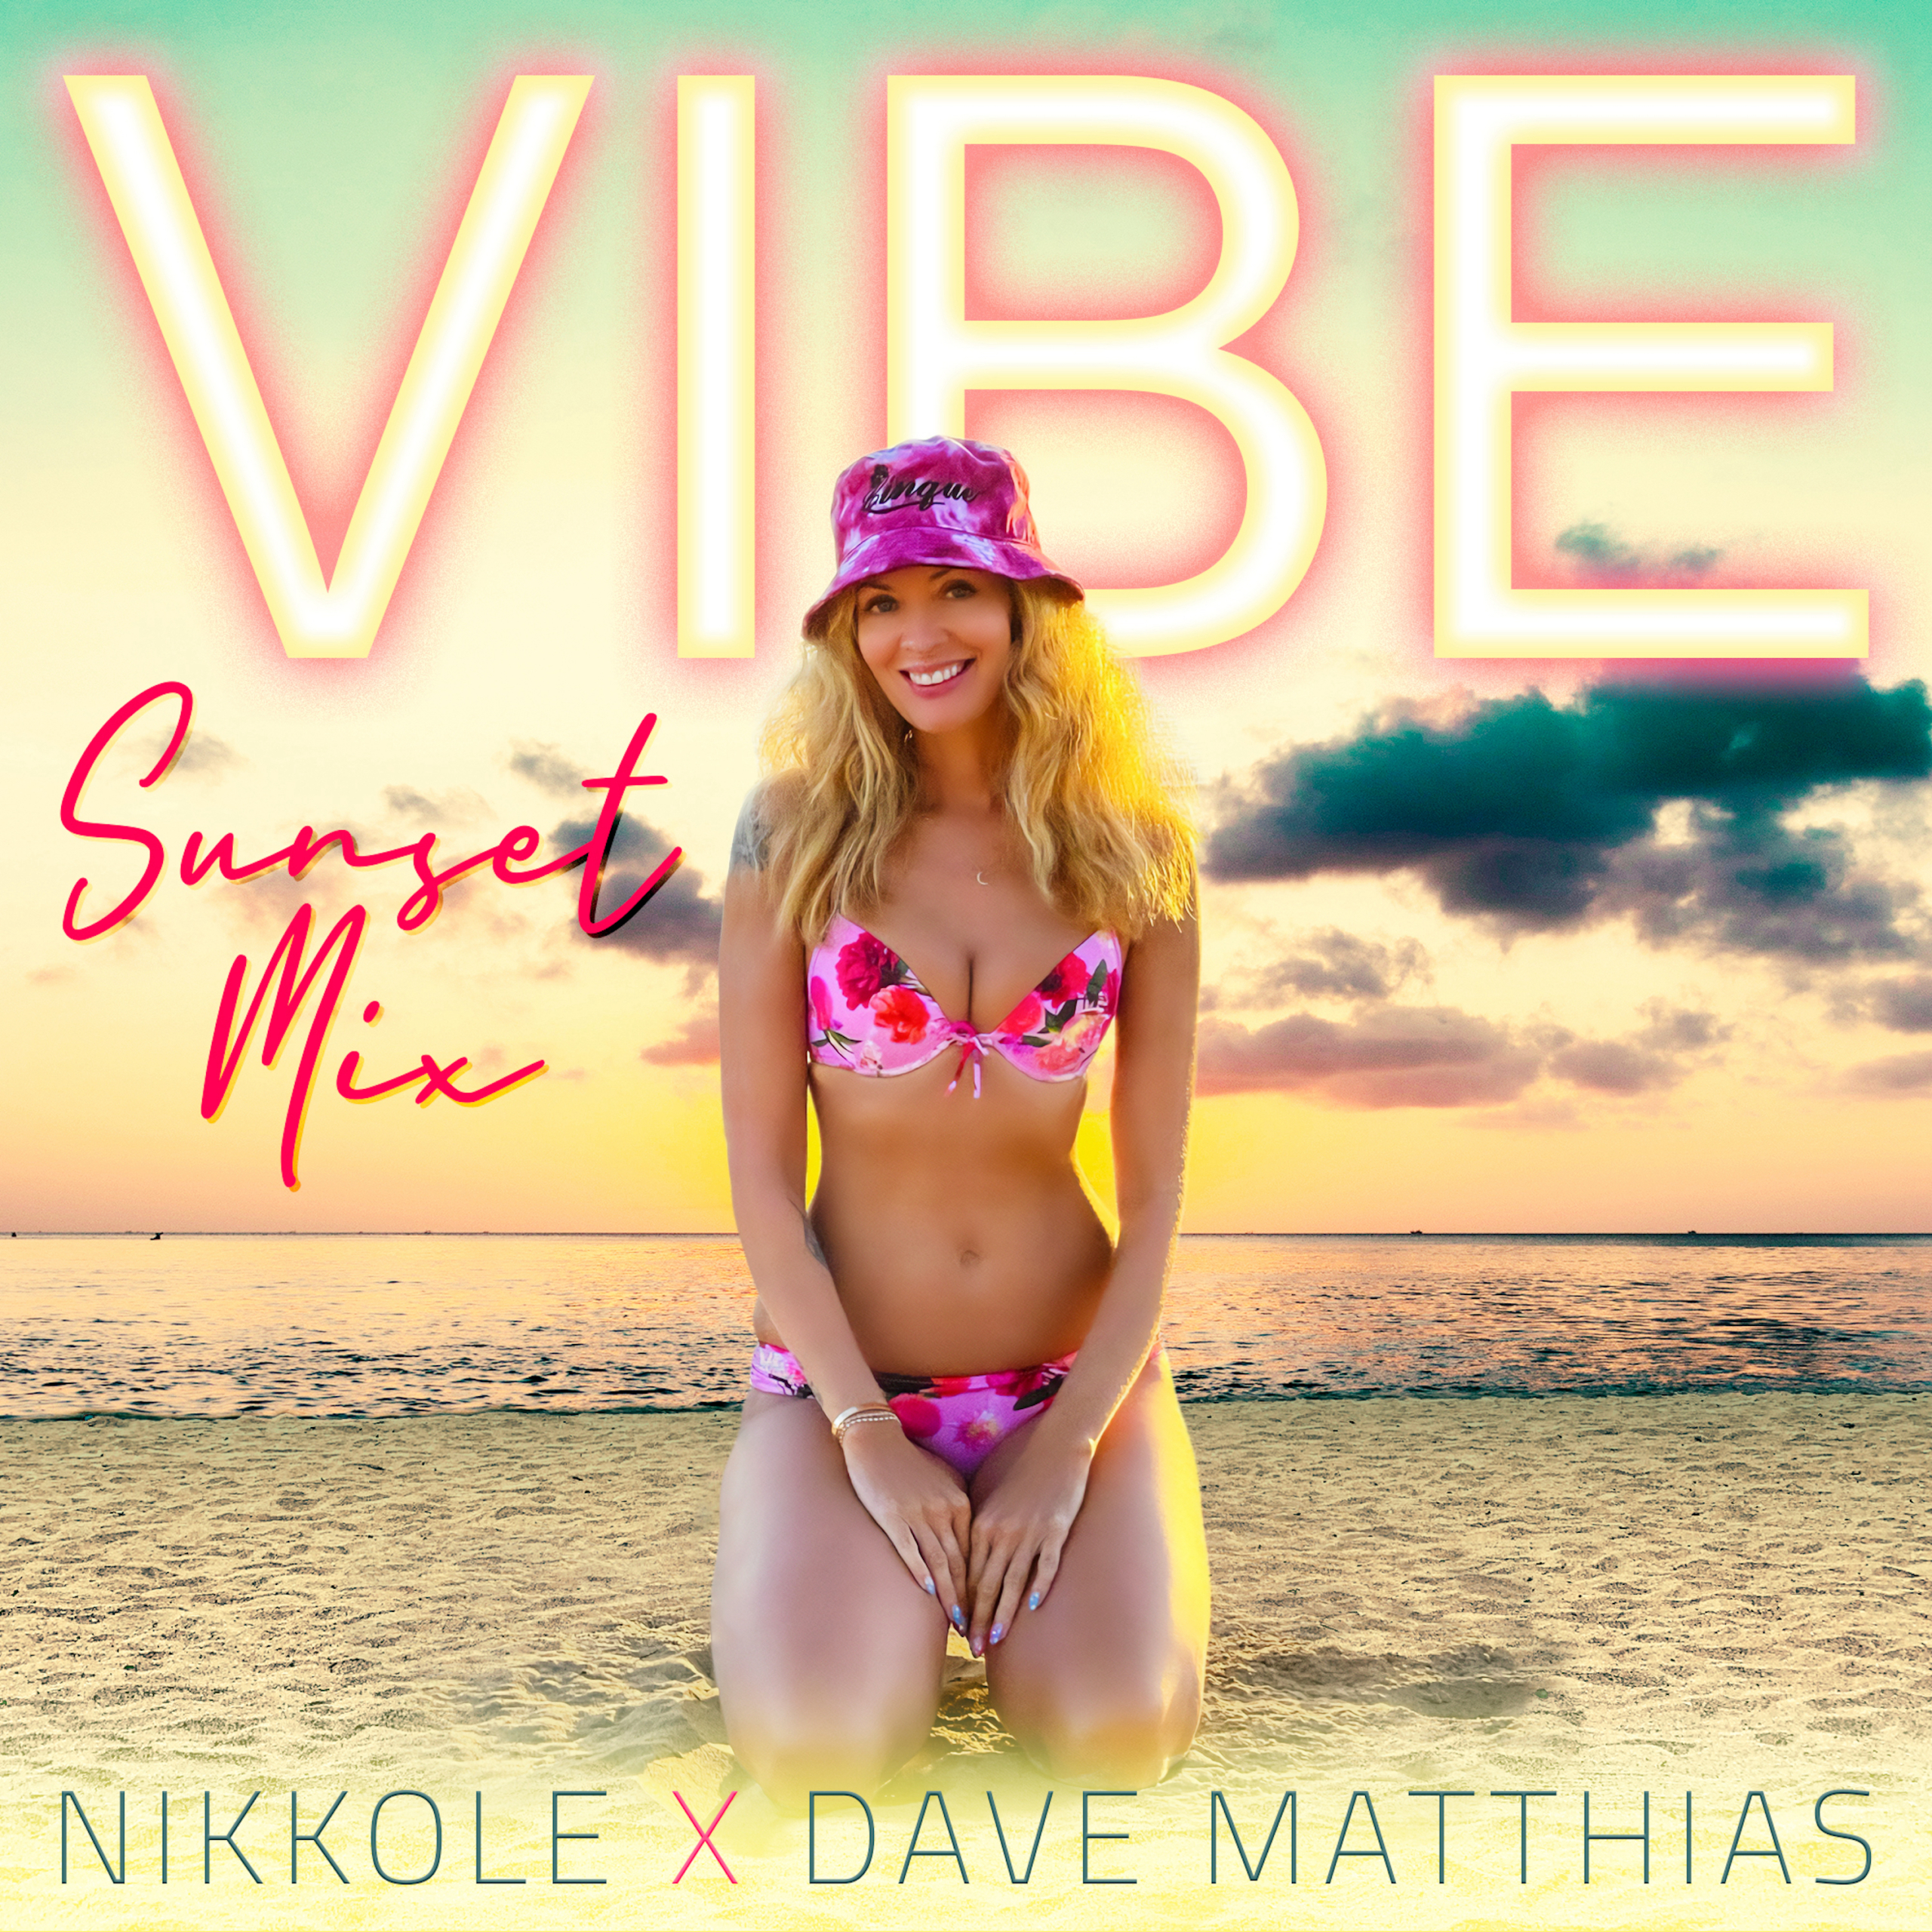 Nikkole x Dave Matthias - Vibe (Sunset Mix)